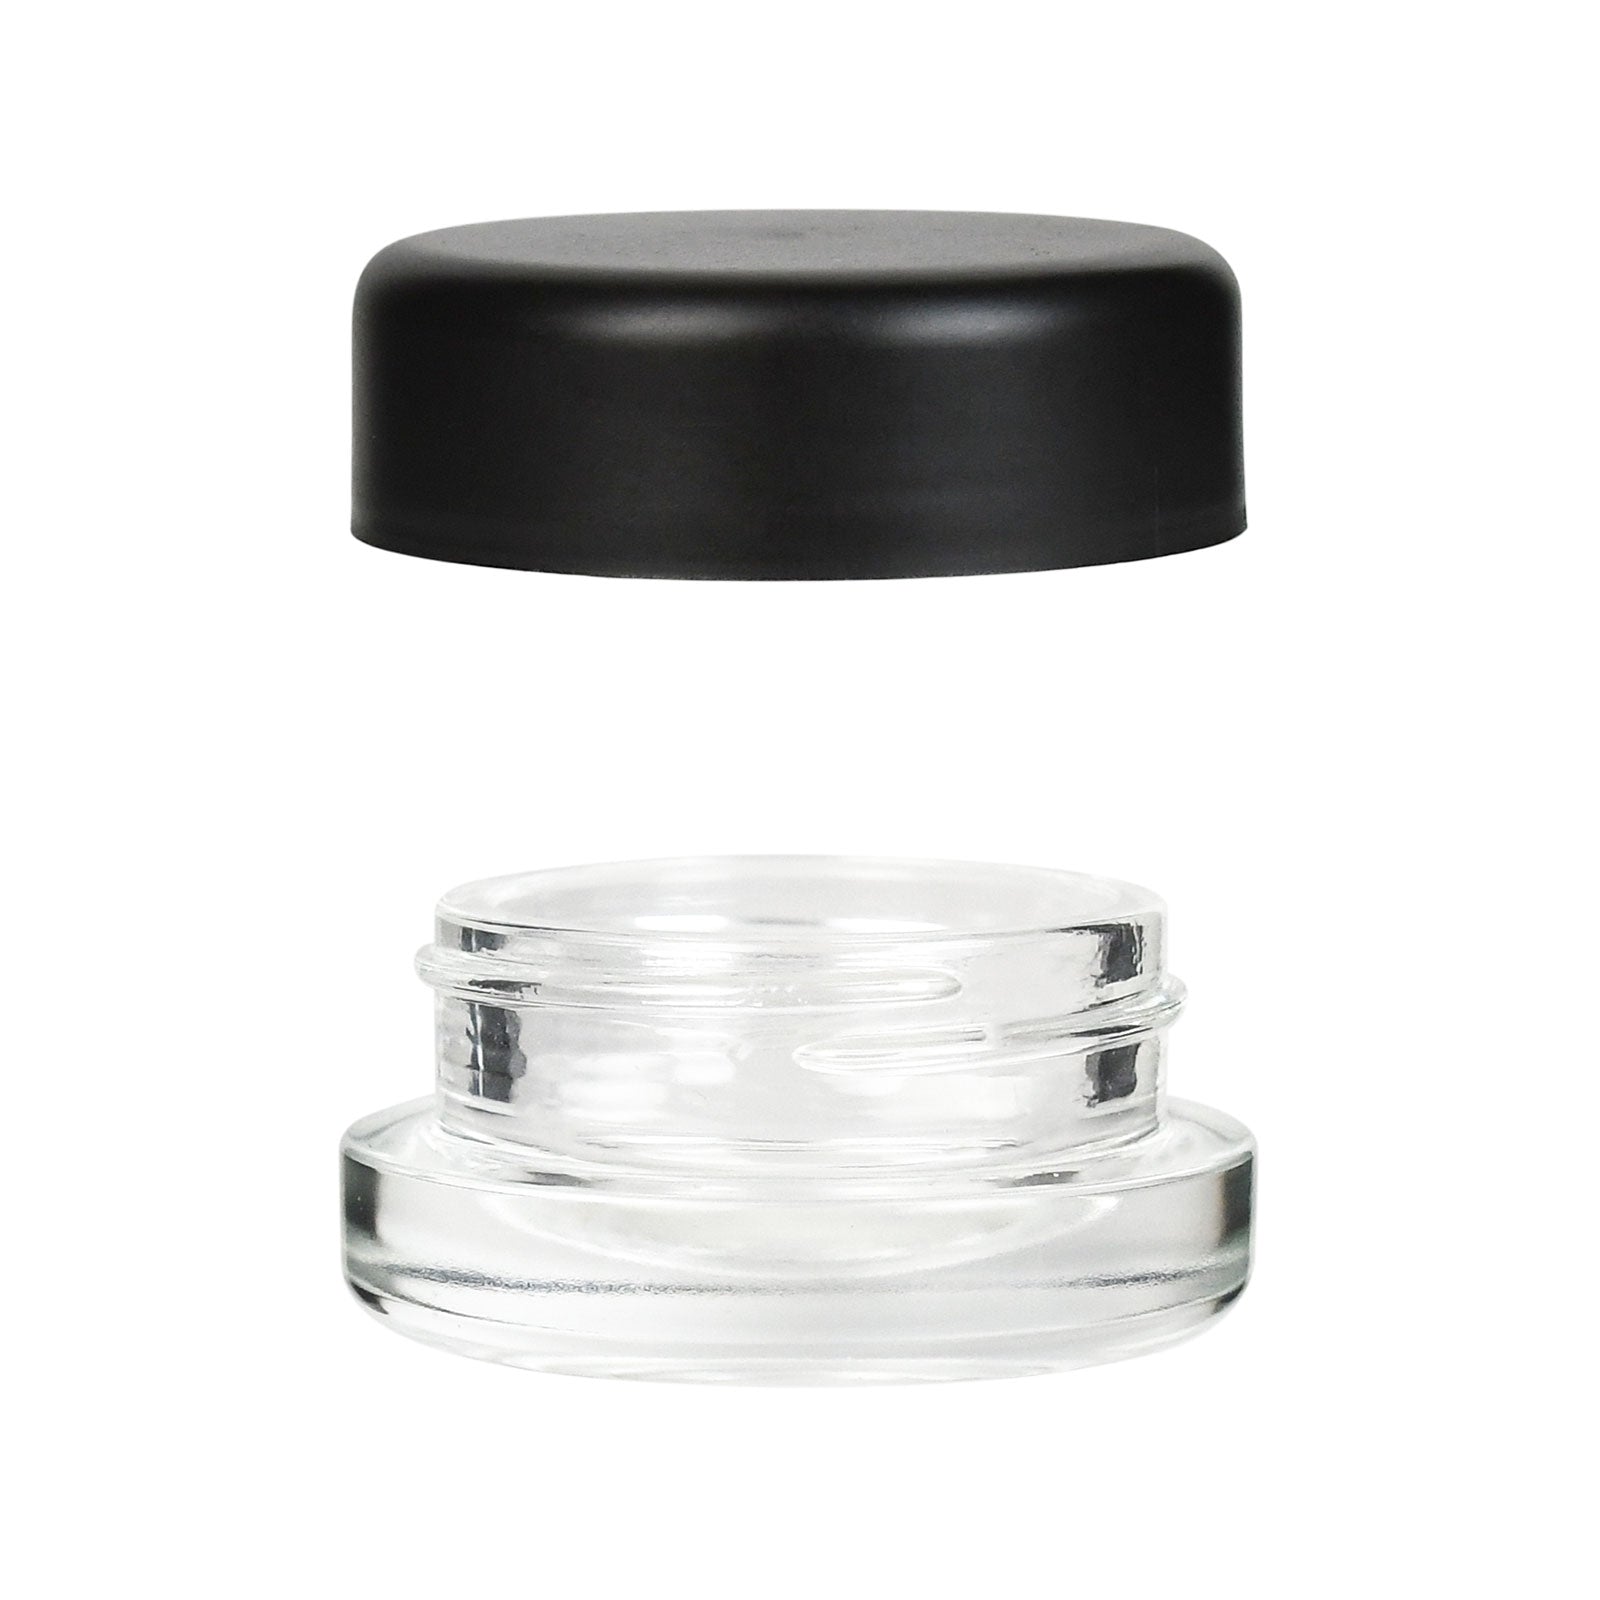 9ml Child Resistant Glass Jar With Black Cap - 2 Gram - 40 Count